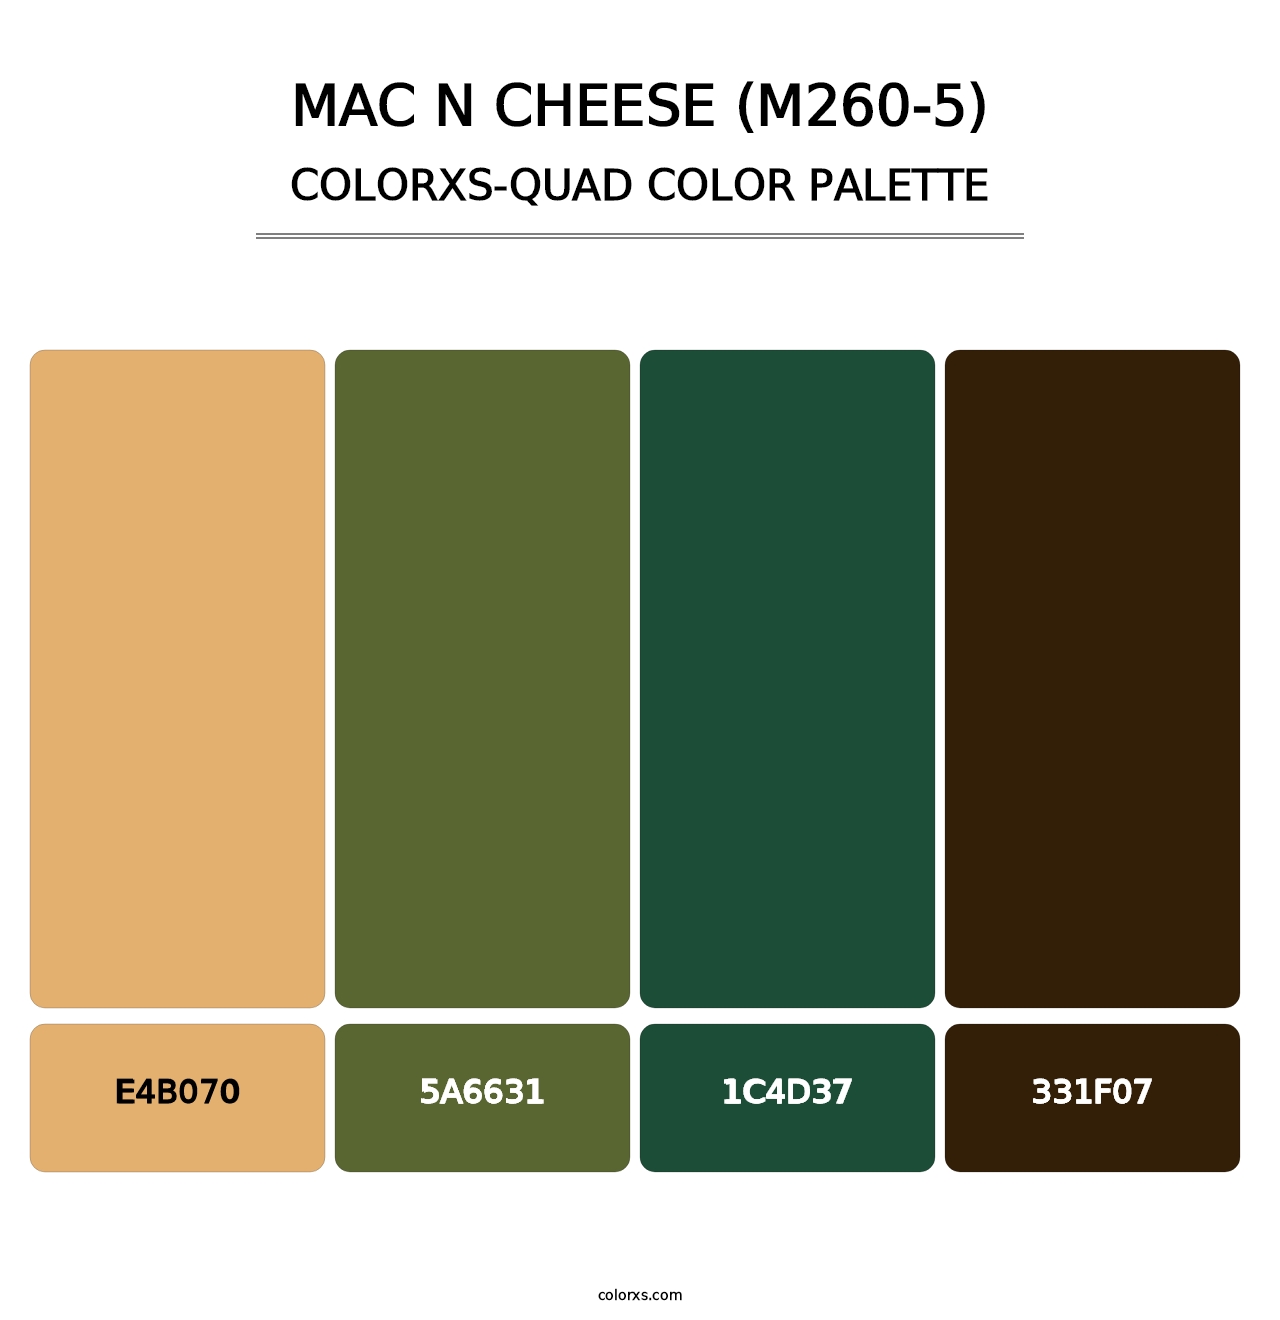 Mac N Cheese (M260-5) - Colorxs Quad Palette